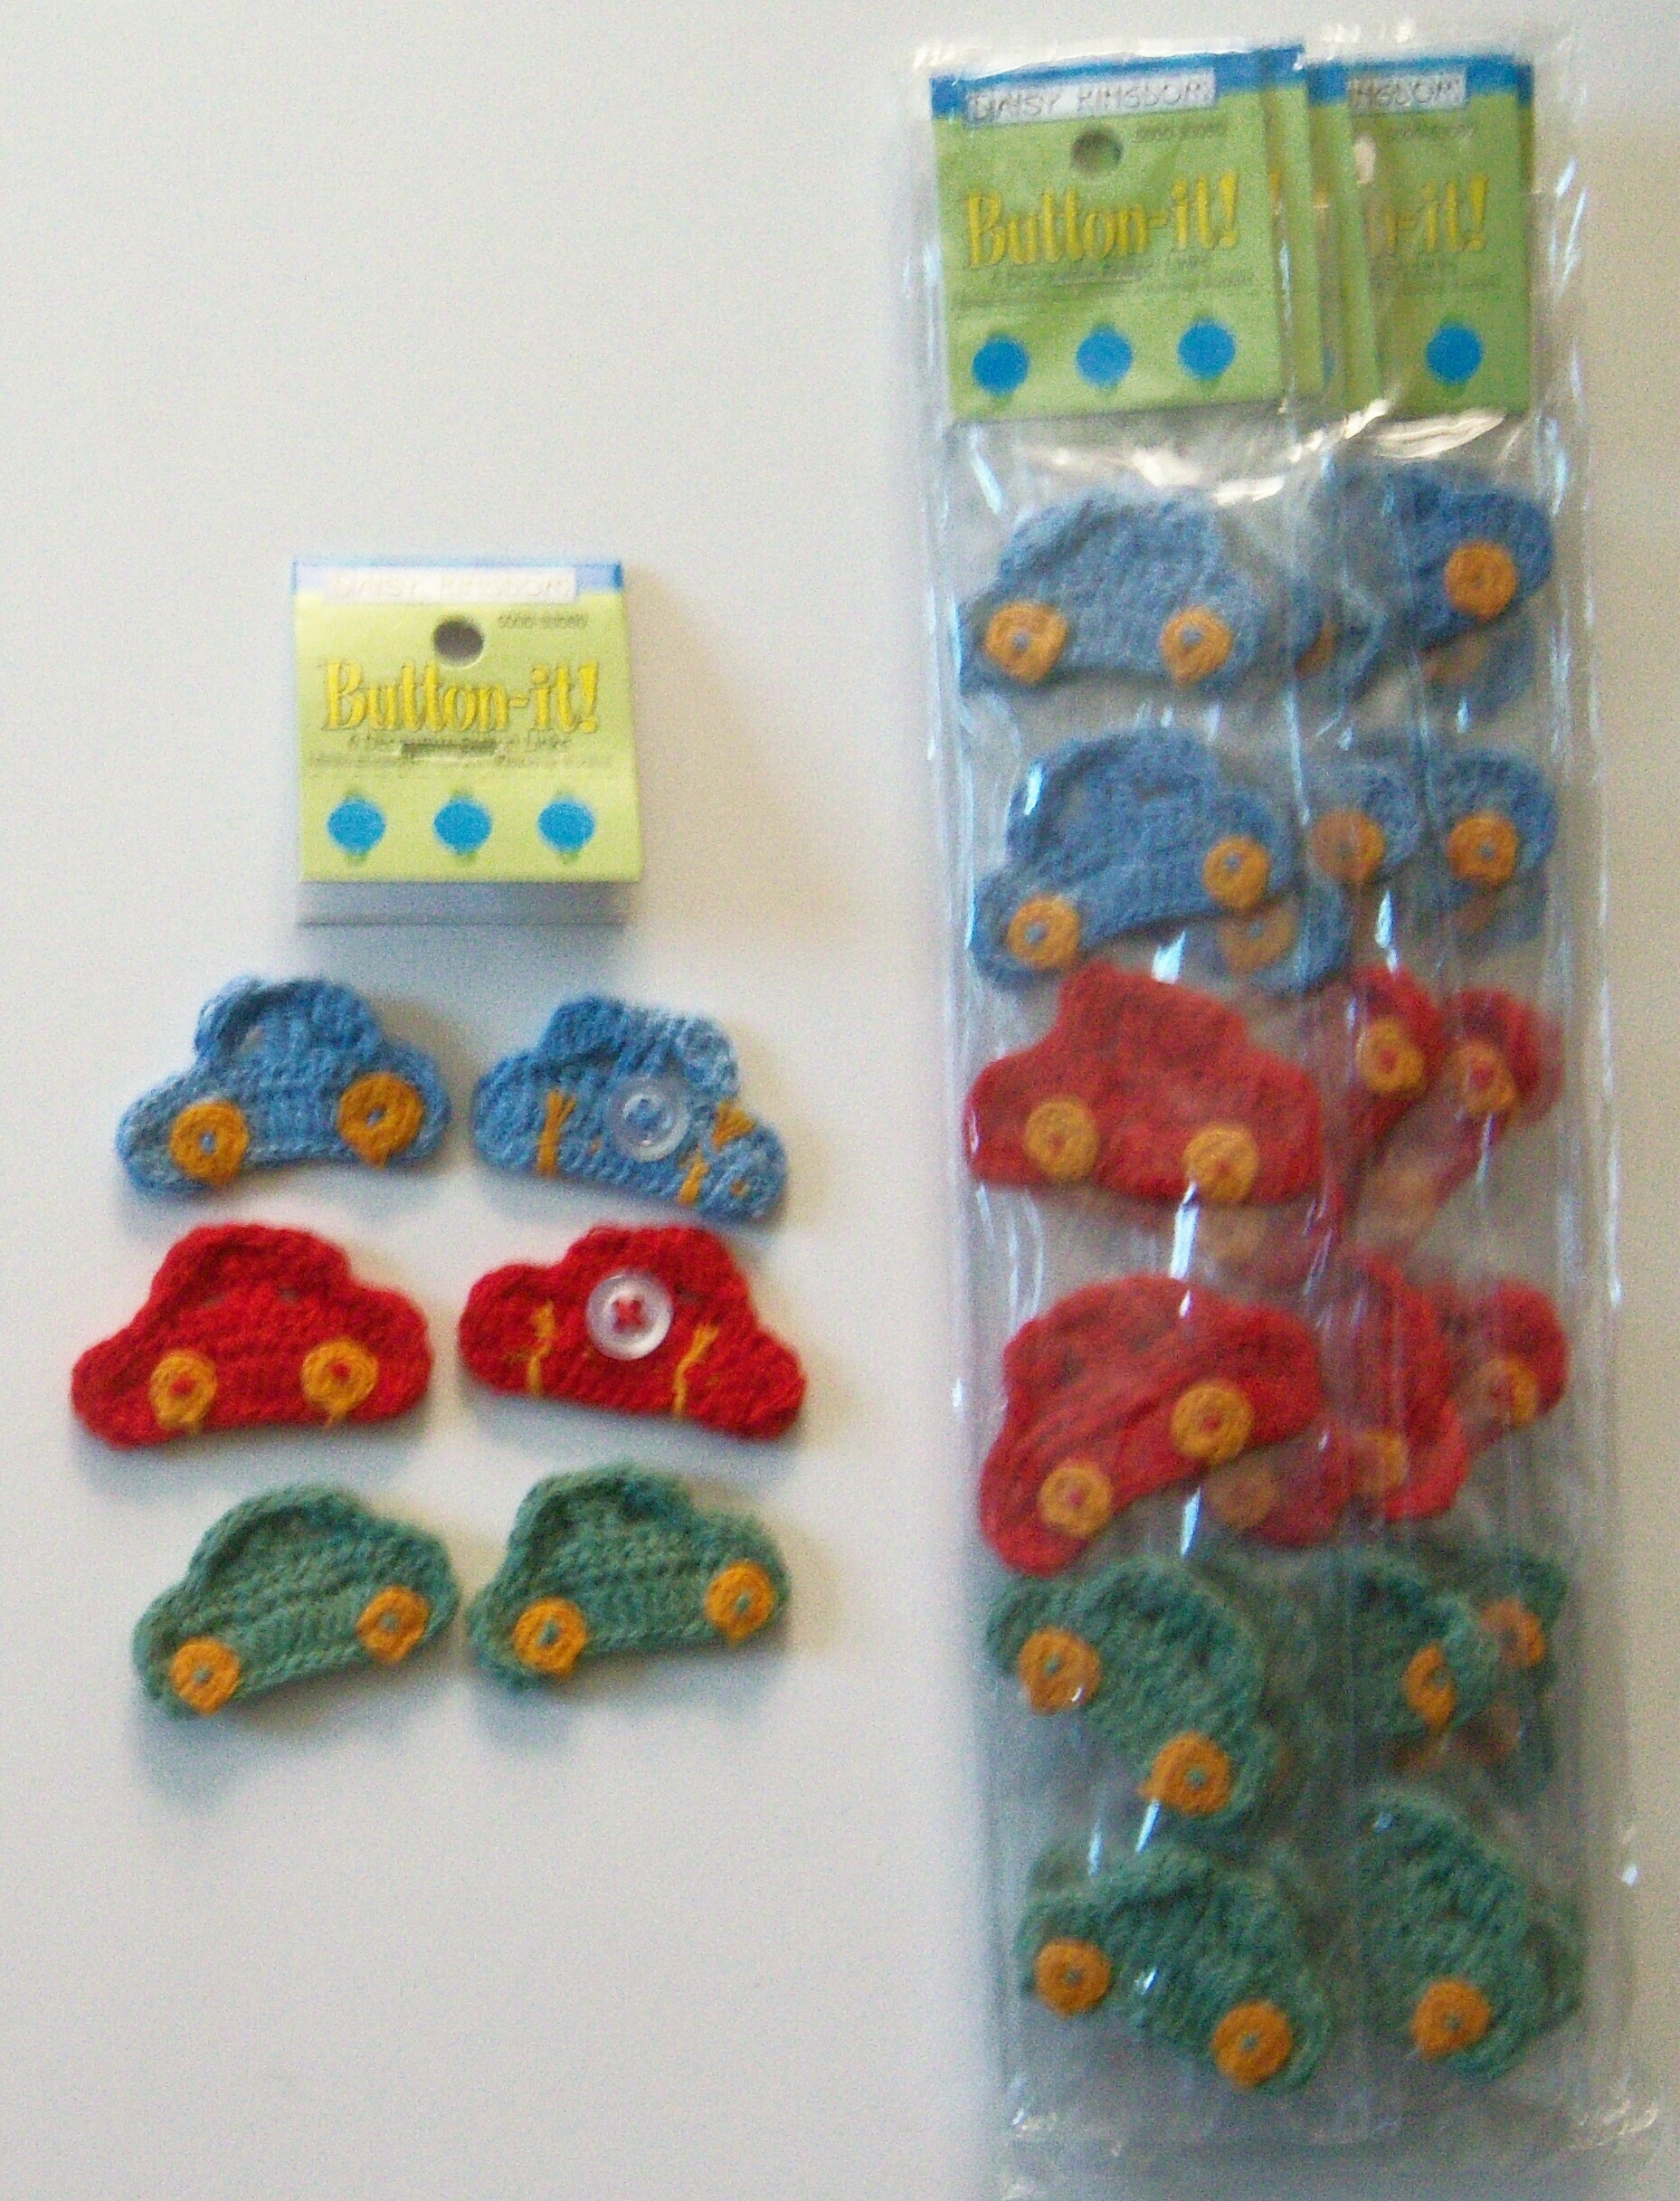 Daisy Kingdom Crochet Cars 1 3/4" 6 piece button-it button links.